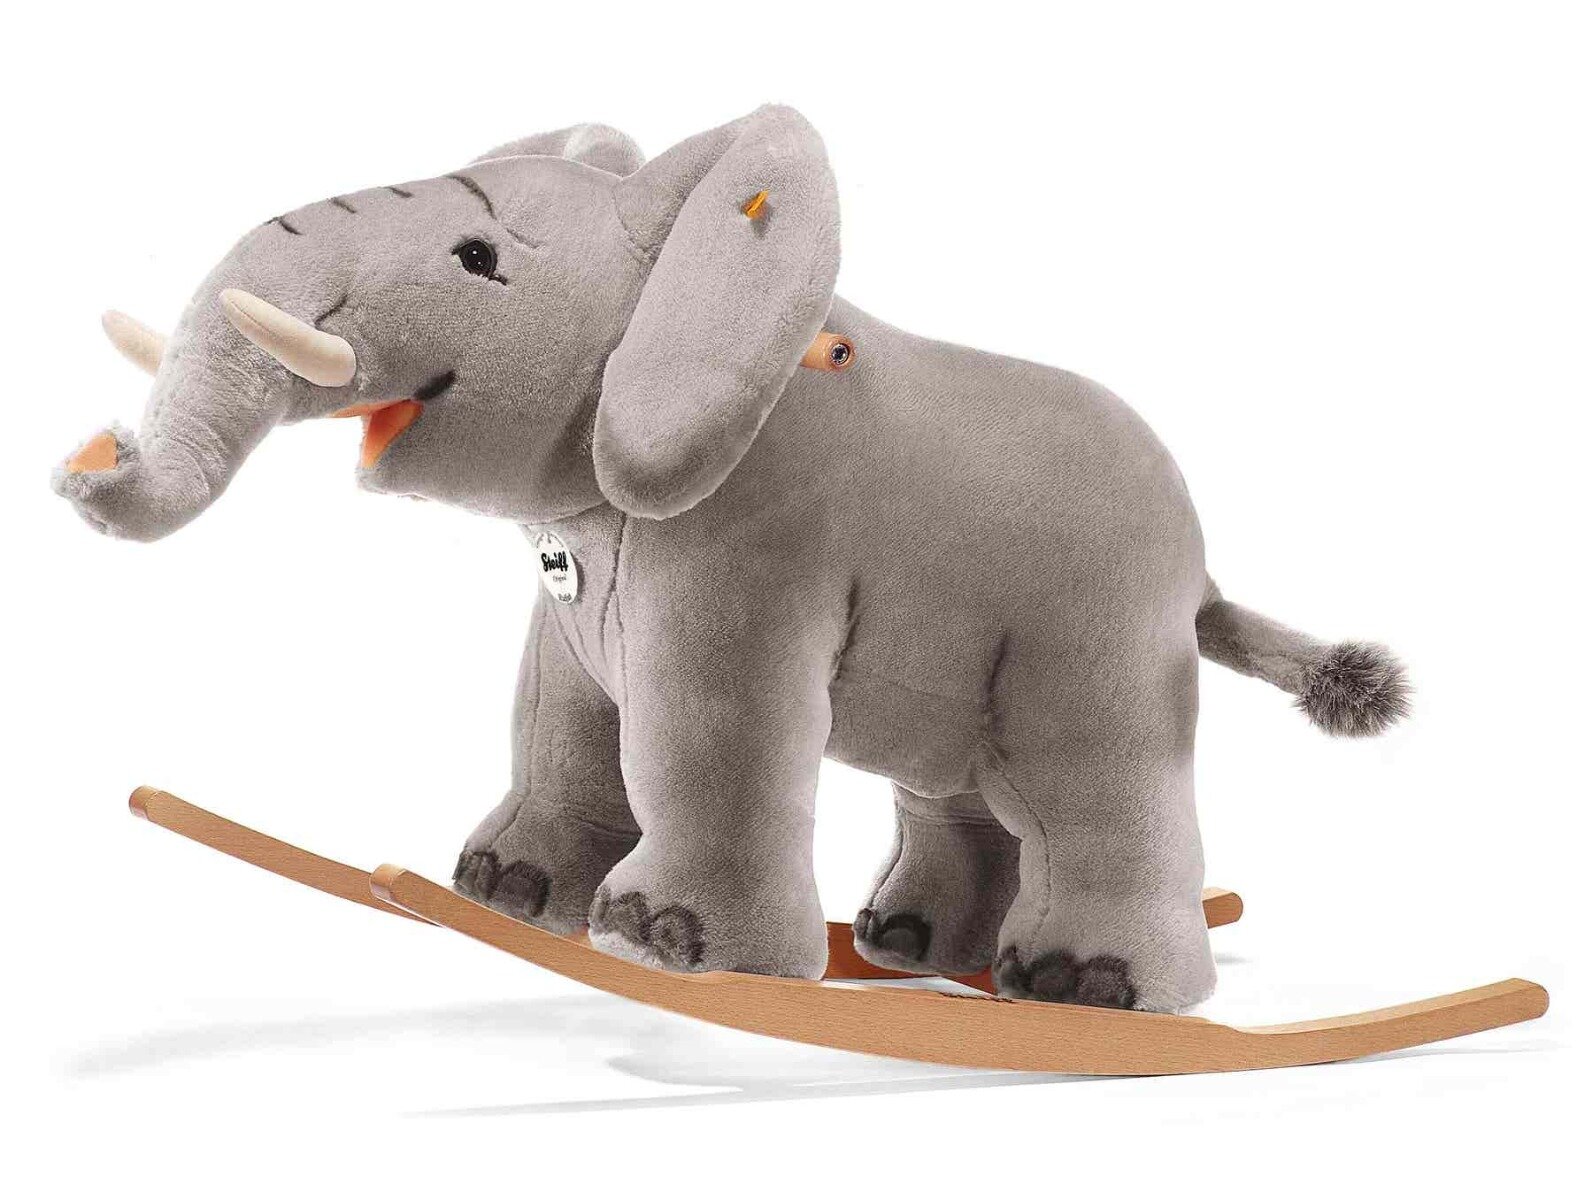 Качалка Steiff Rocking animal Trampili elephant (Штайф слон-качалка Трампили)